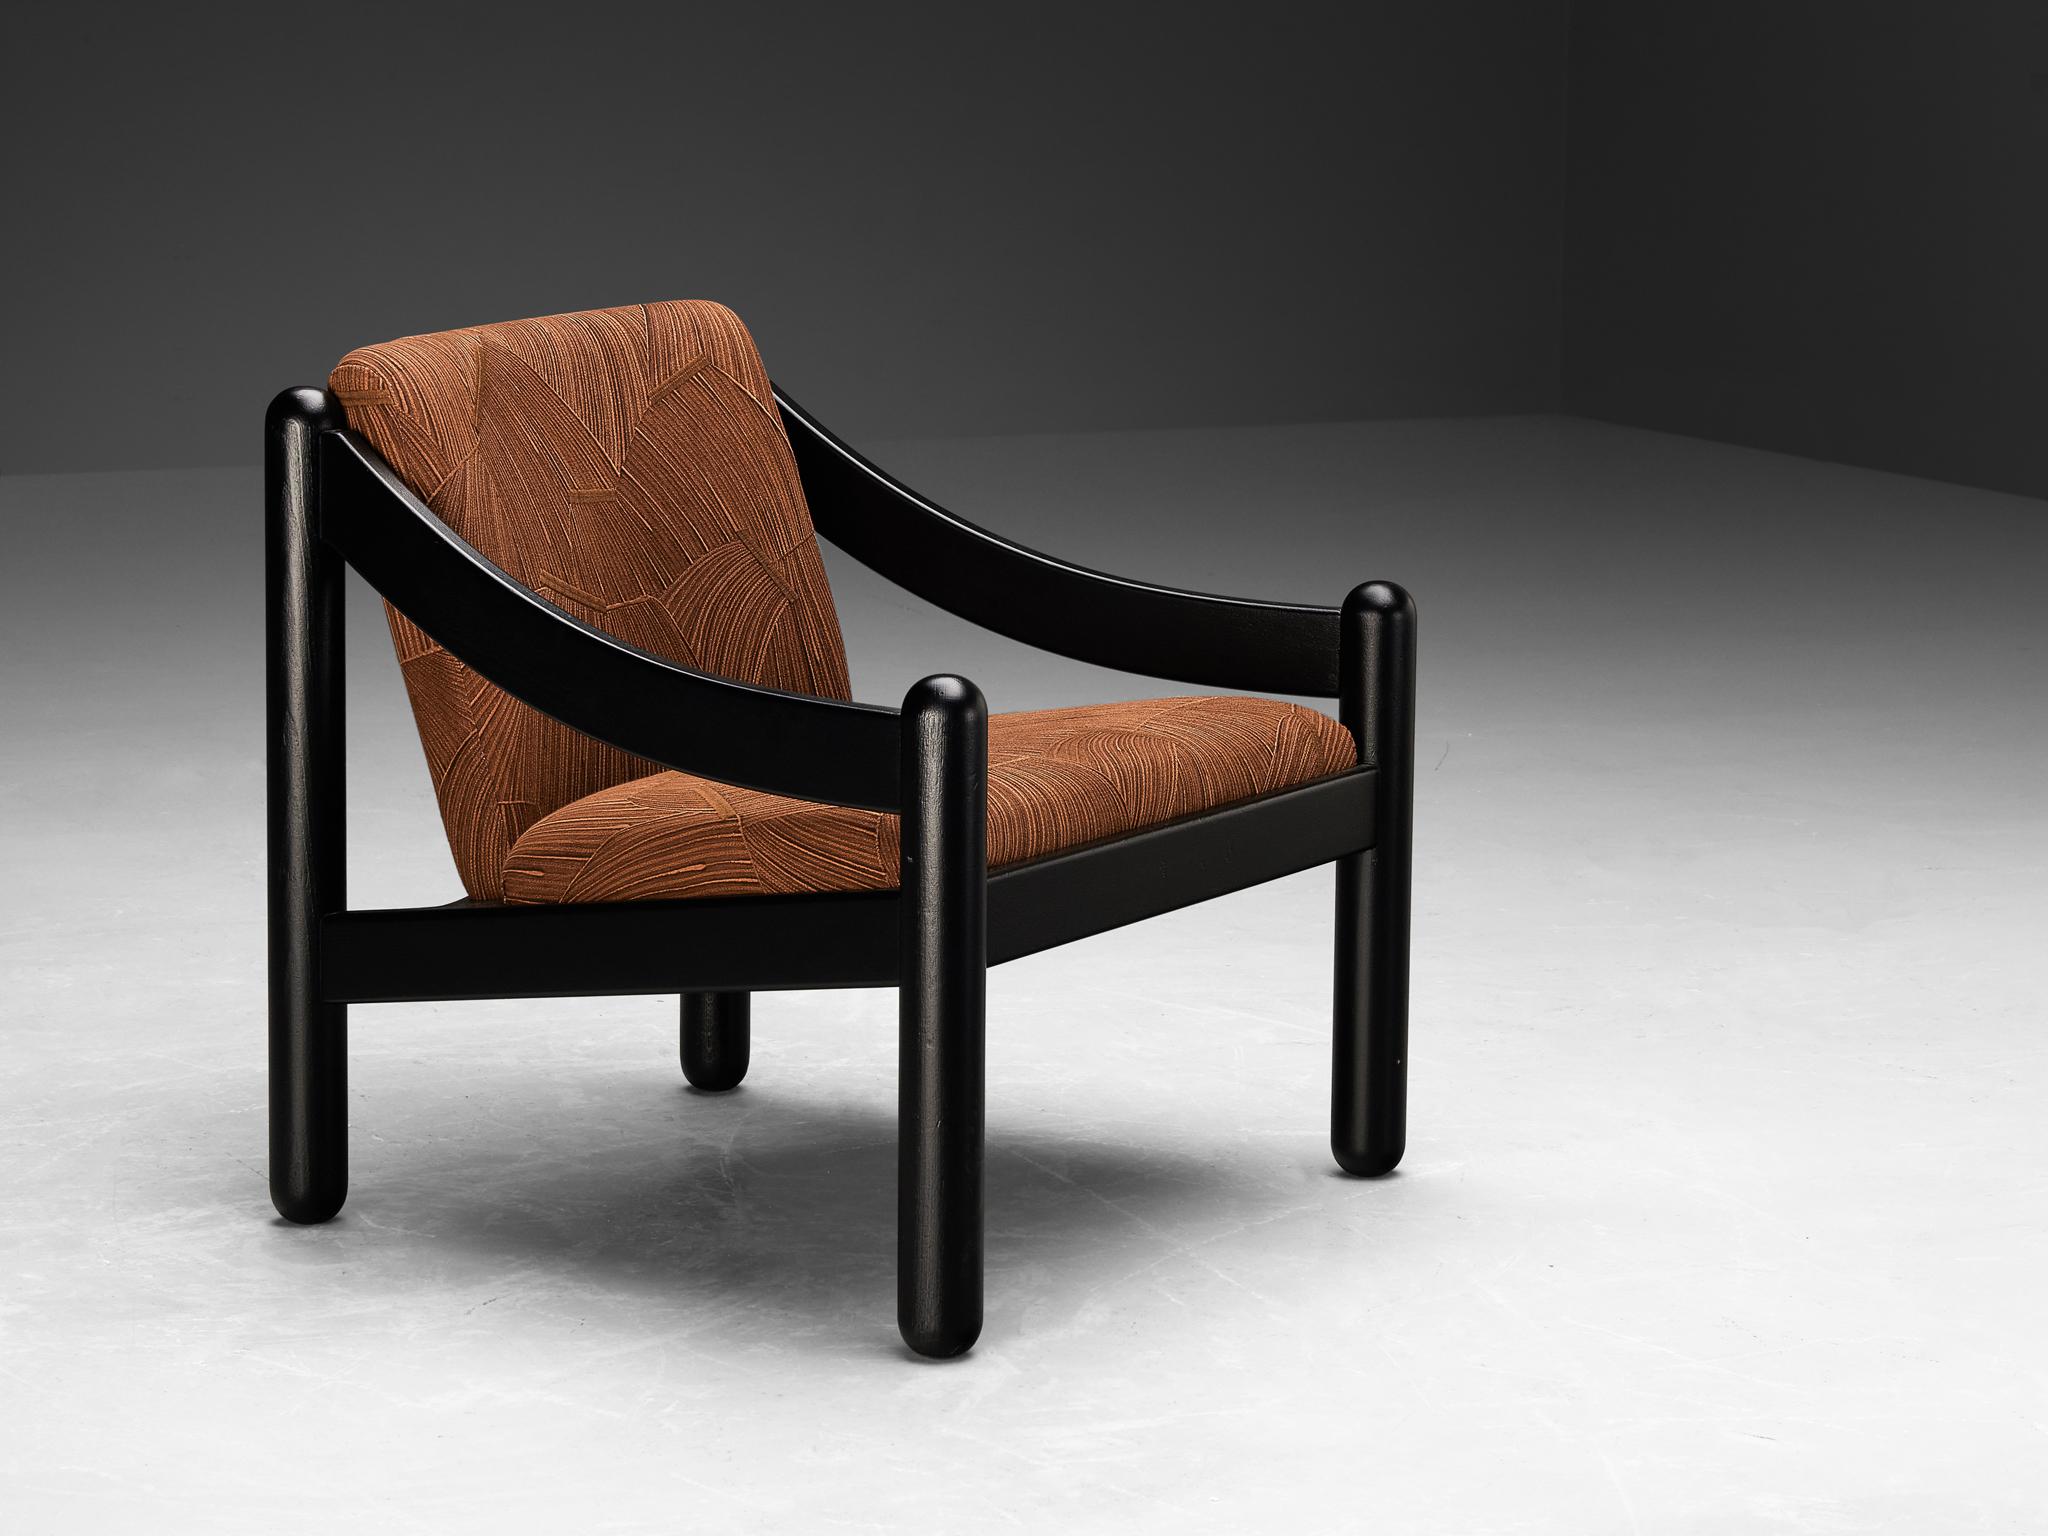 Vico Magistretti pour Cassina, chaise longue 'Carimate', hêtre laqué, tissu Larsen, Italie, design 1963

La chaise longue 